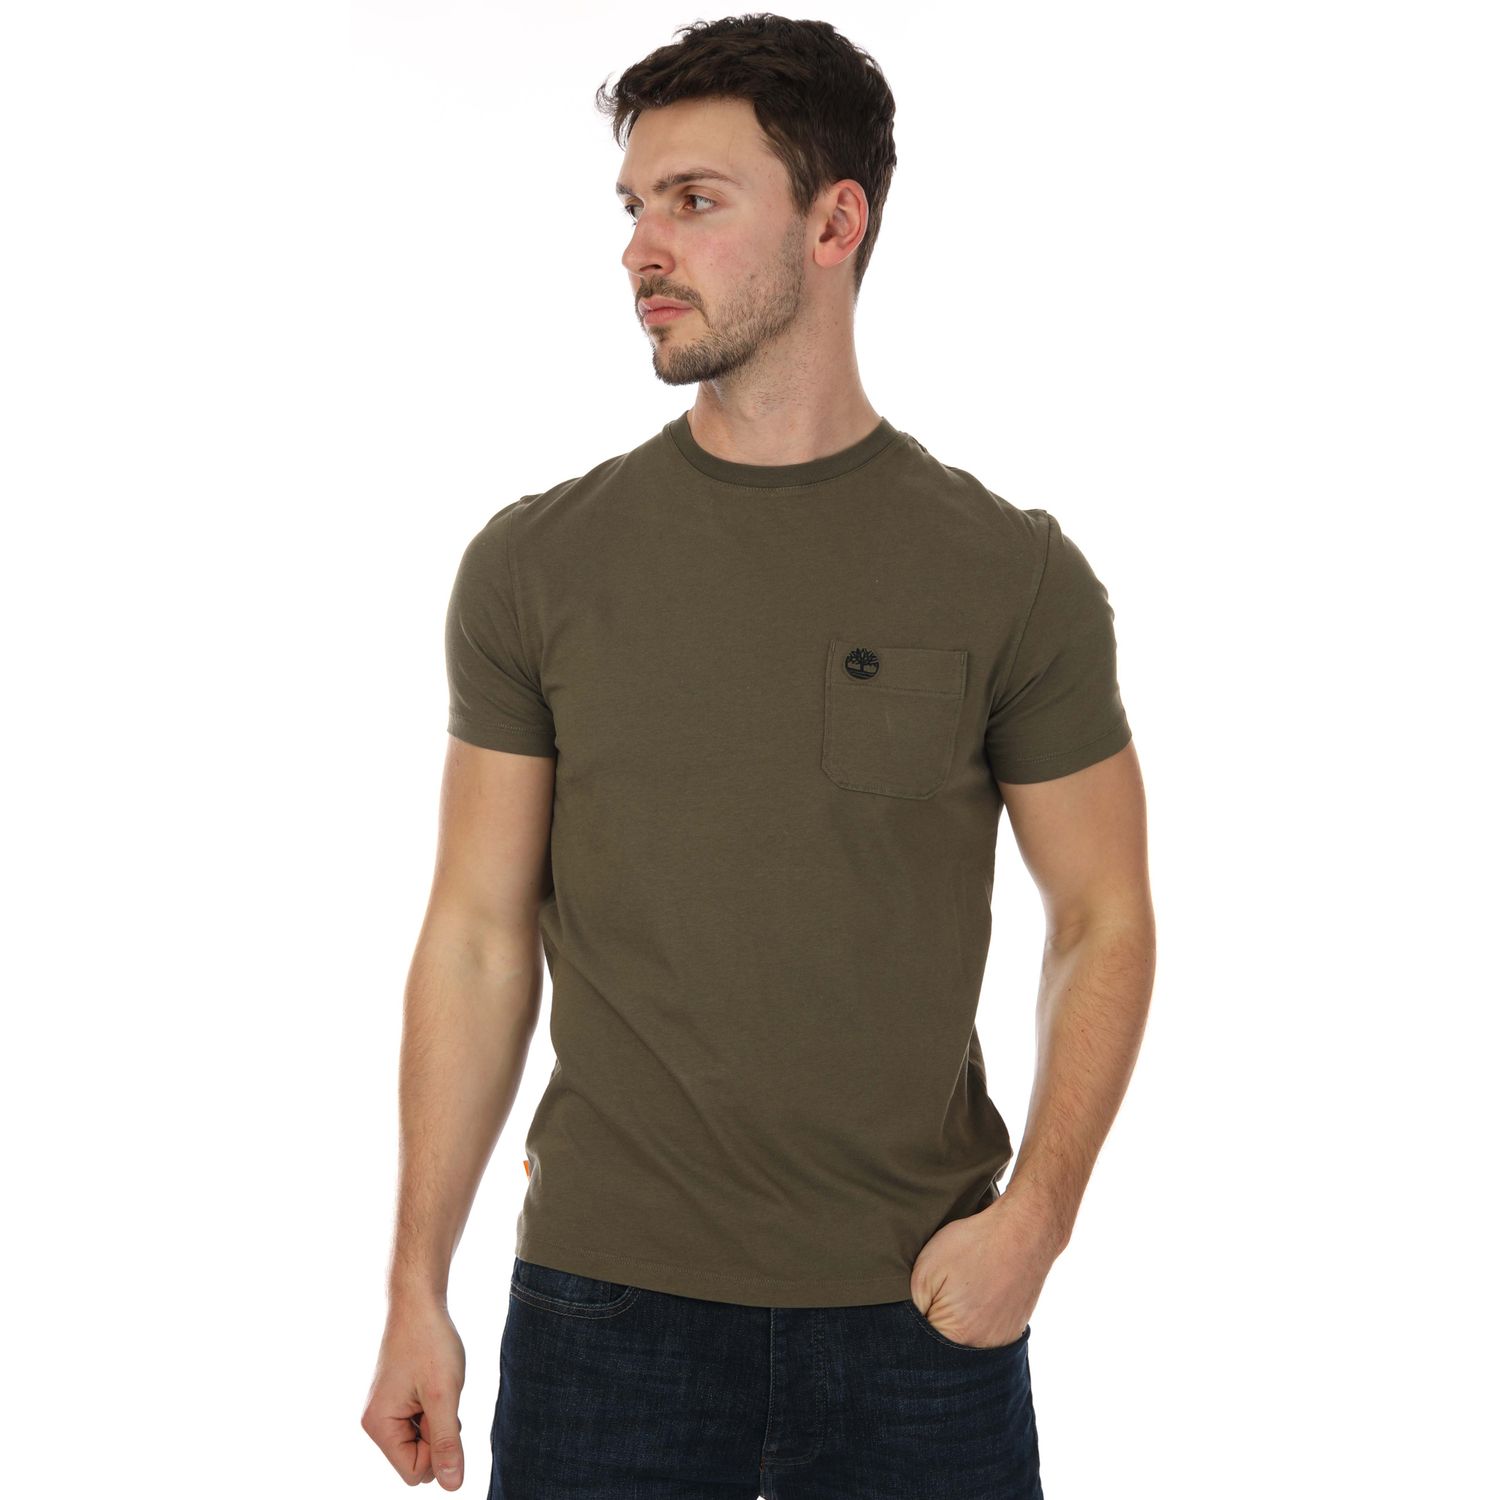 Khaki Timberland Mens - Dunstan Label T-Shirt River The Pocket Get